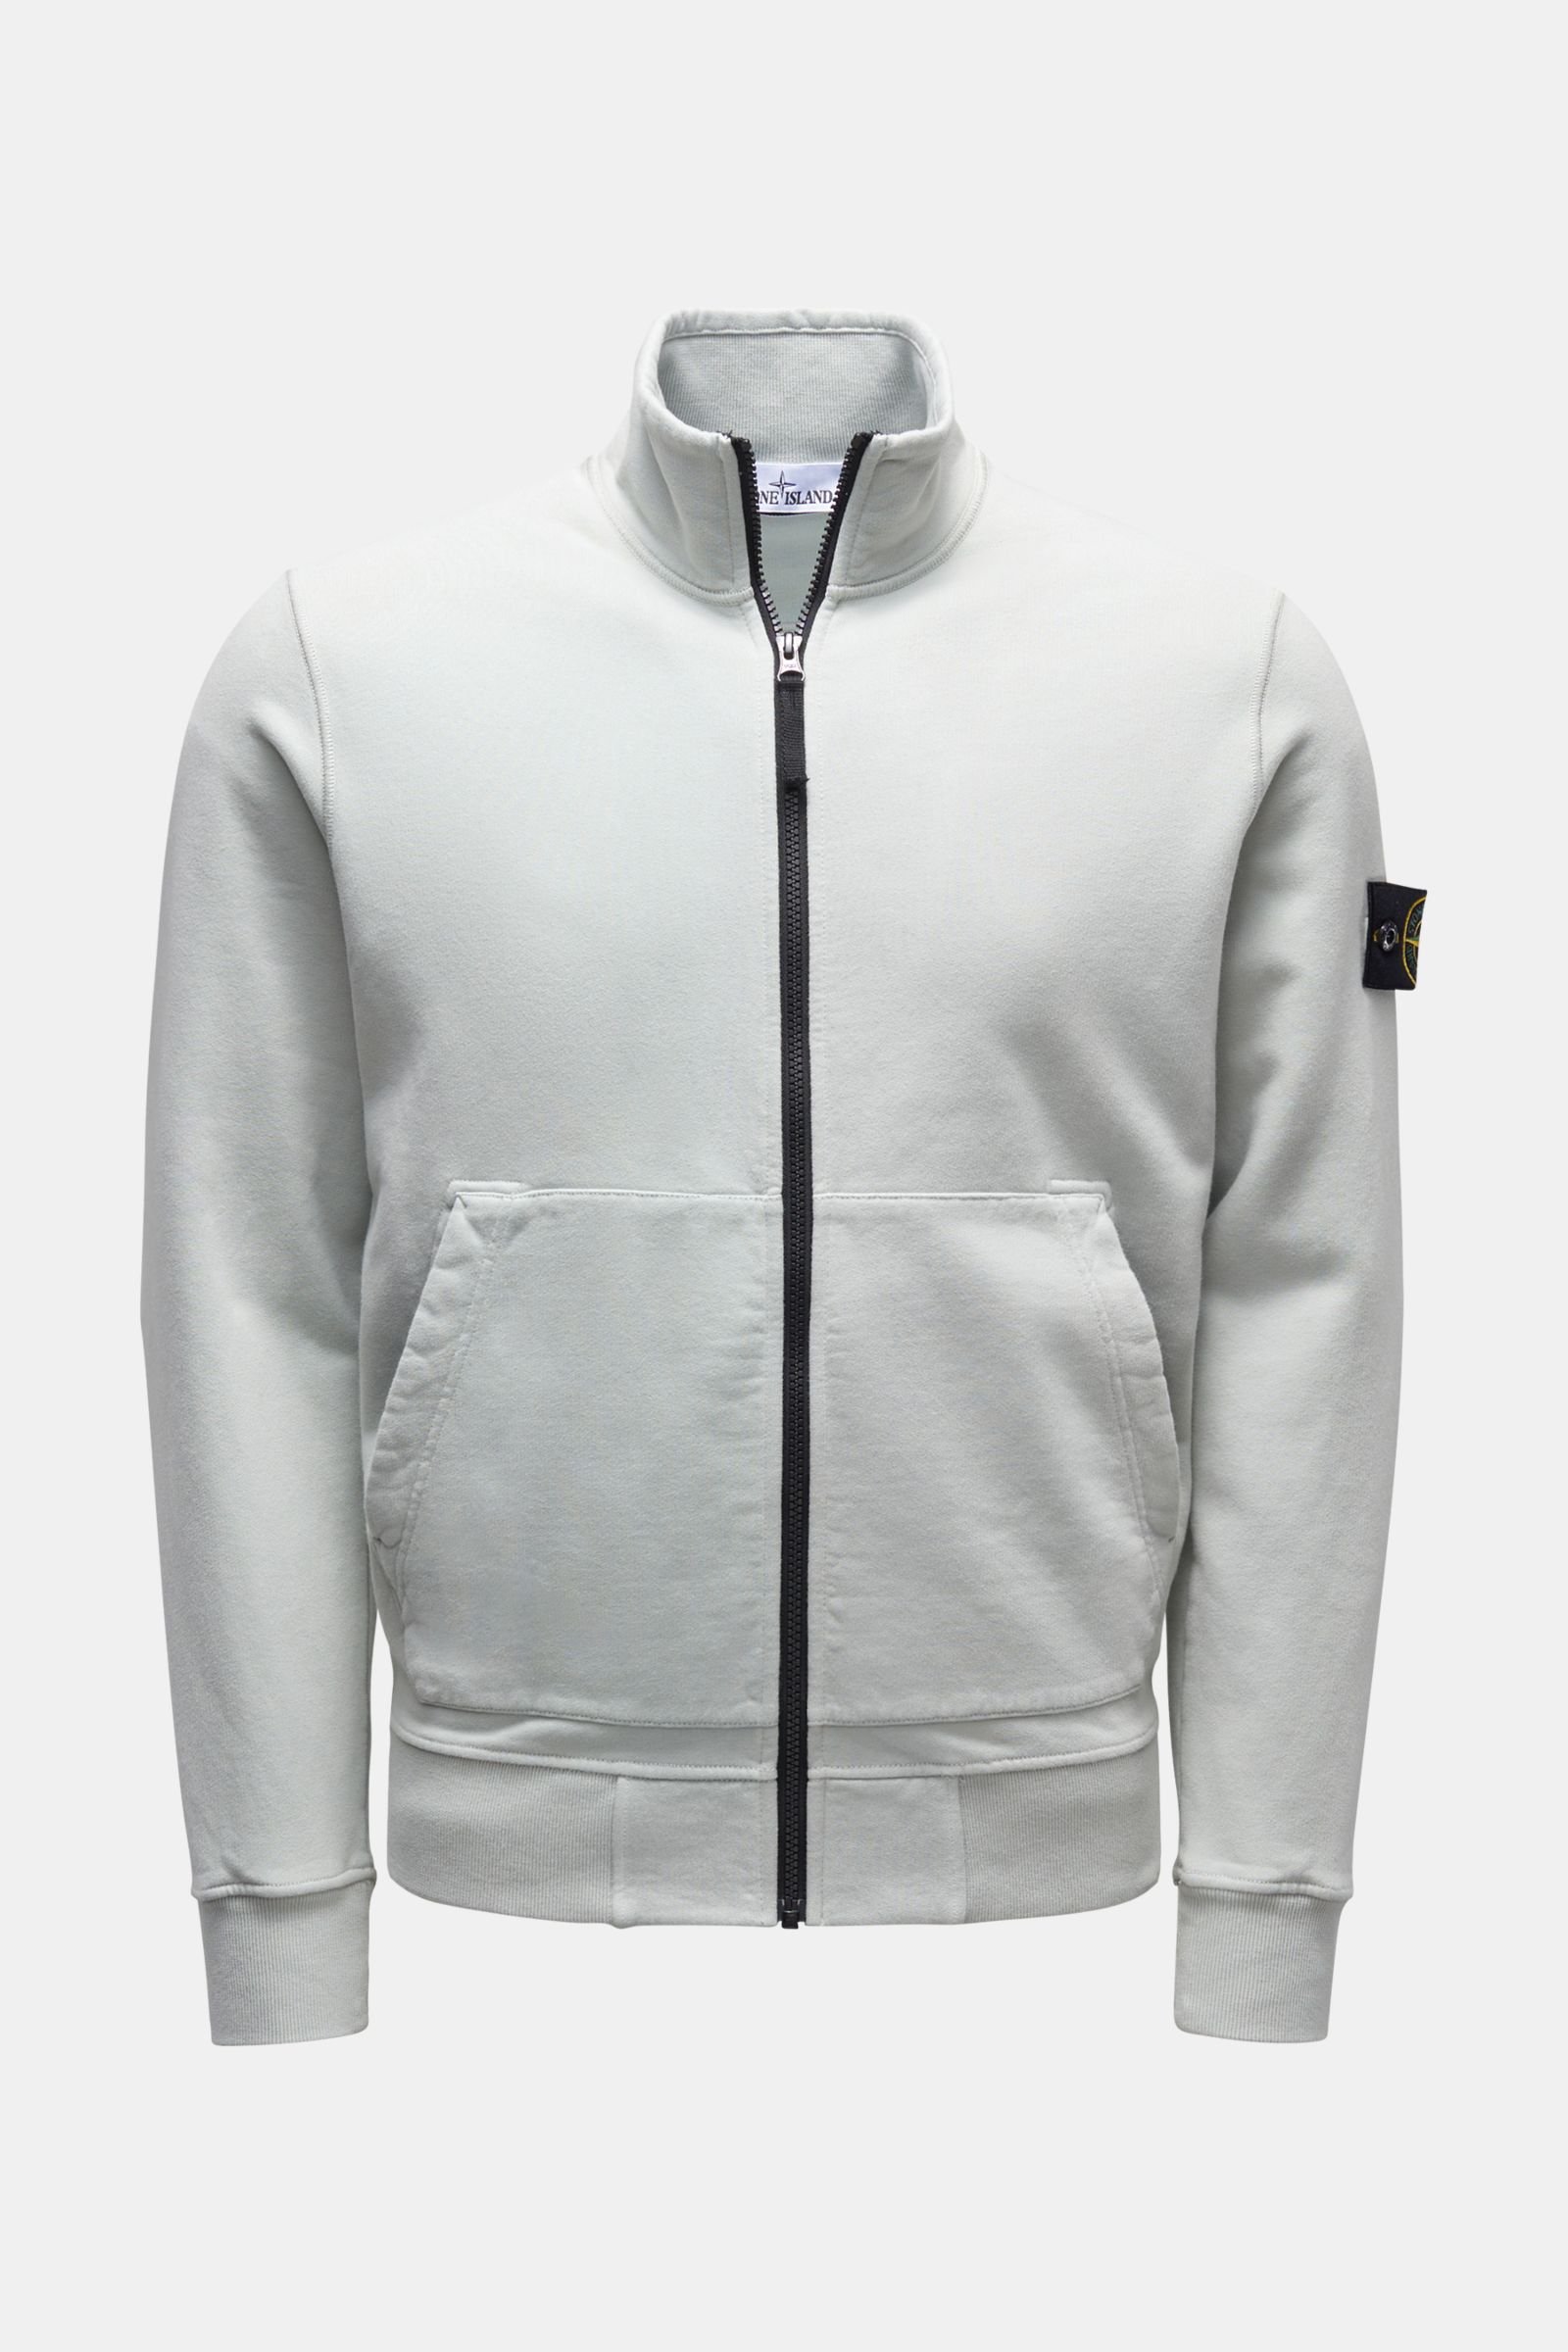 Sweat jacket light grey